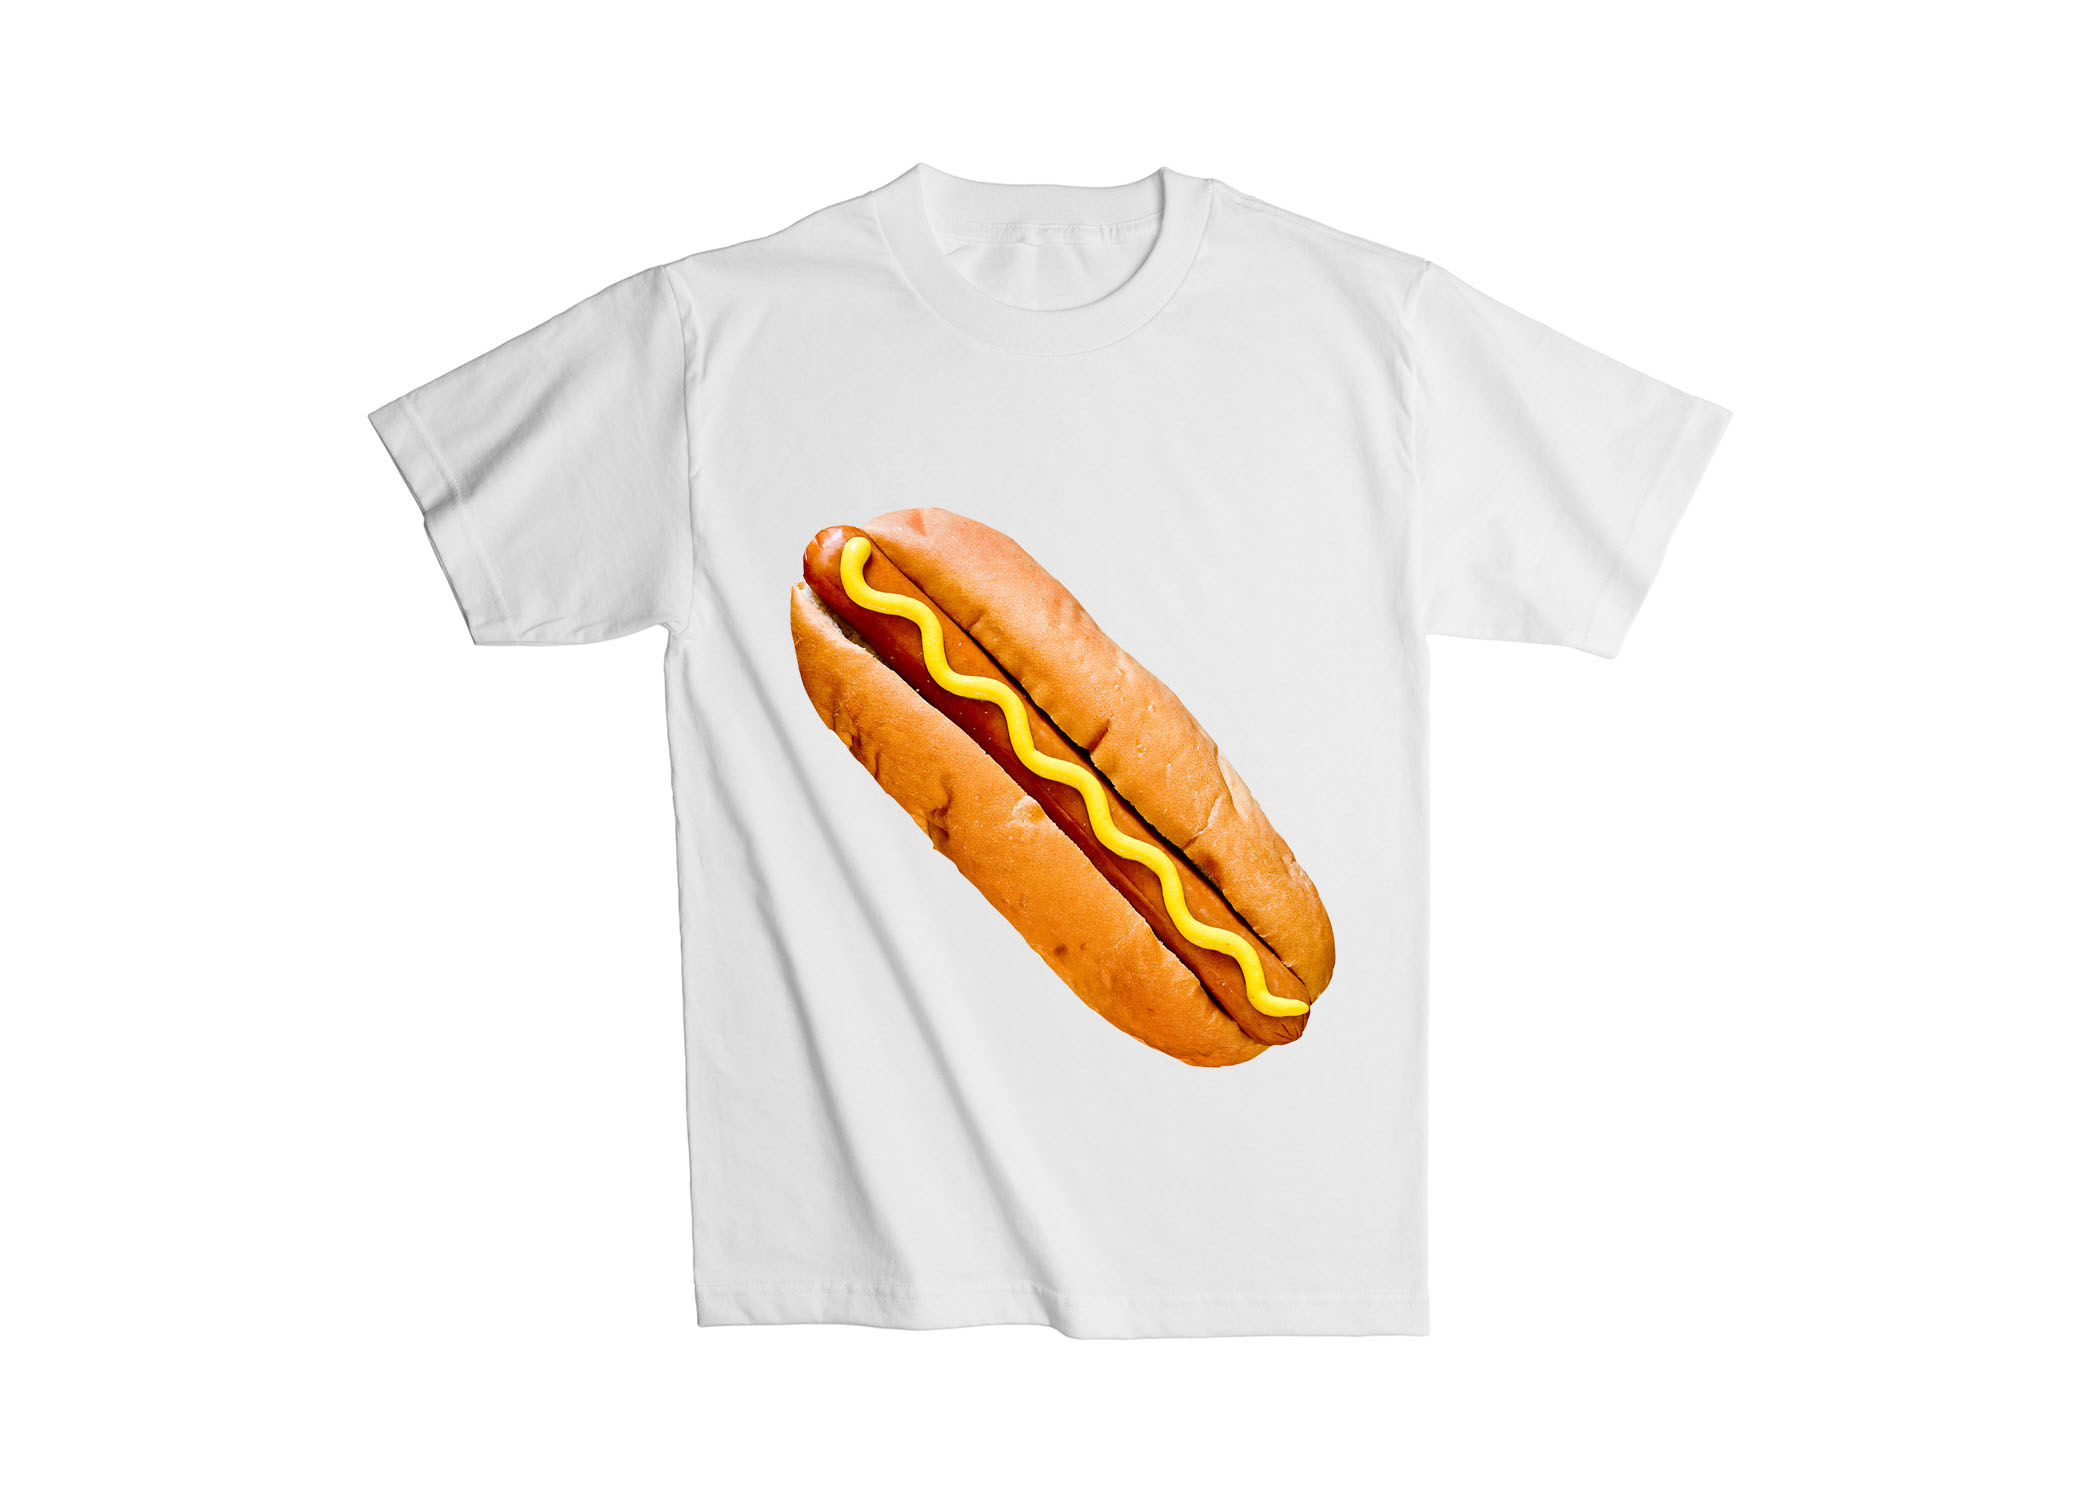 hotdog on a shirt